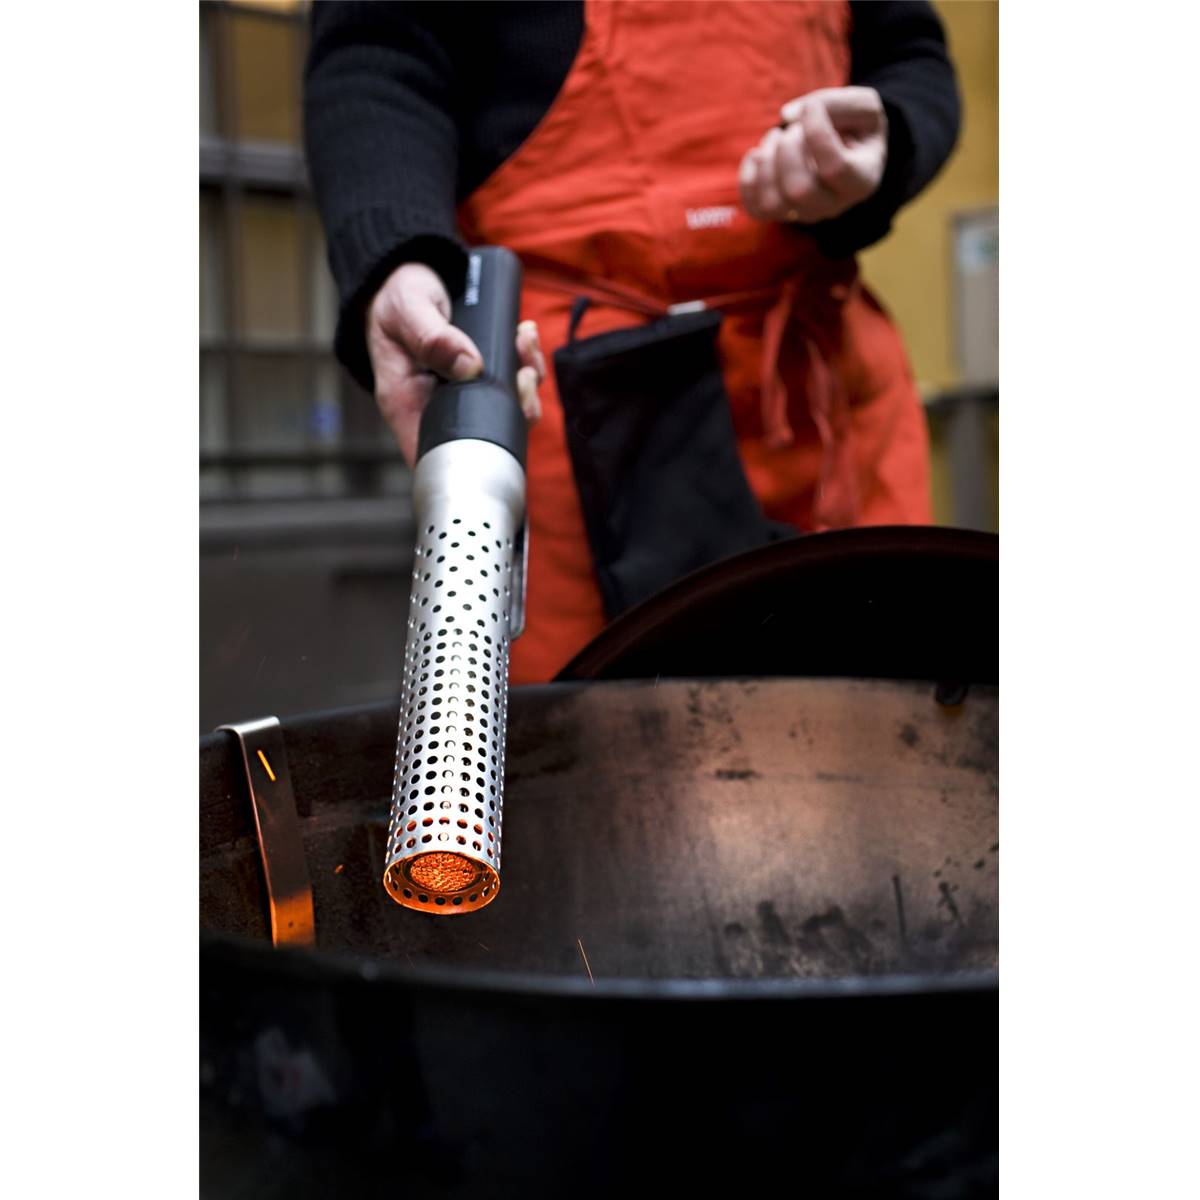 Looftlighter avec gant - L'allume-feu ultime - Allume-grill pour barbecue -  Briquet